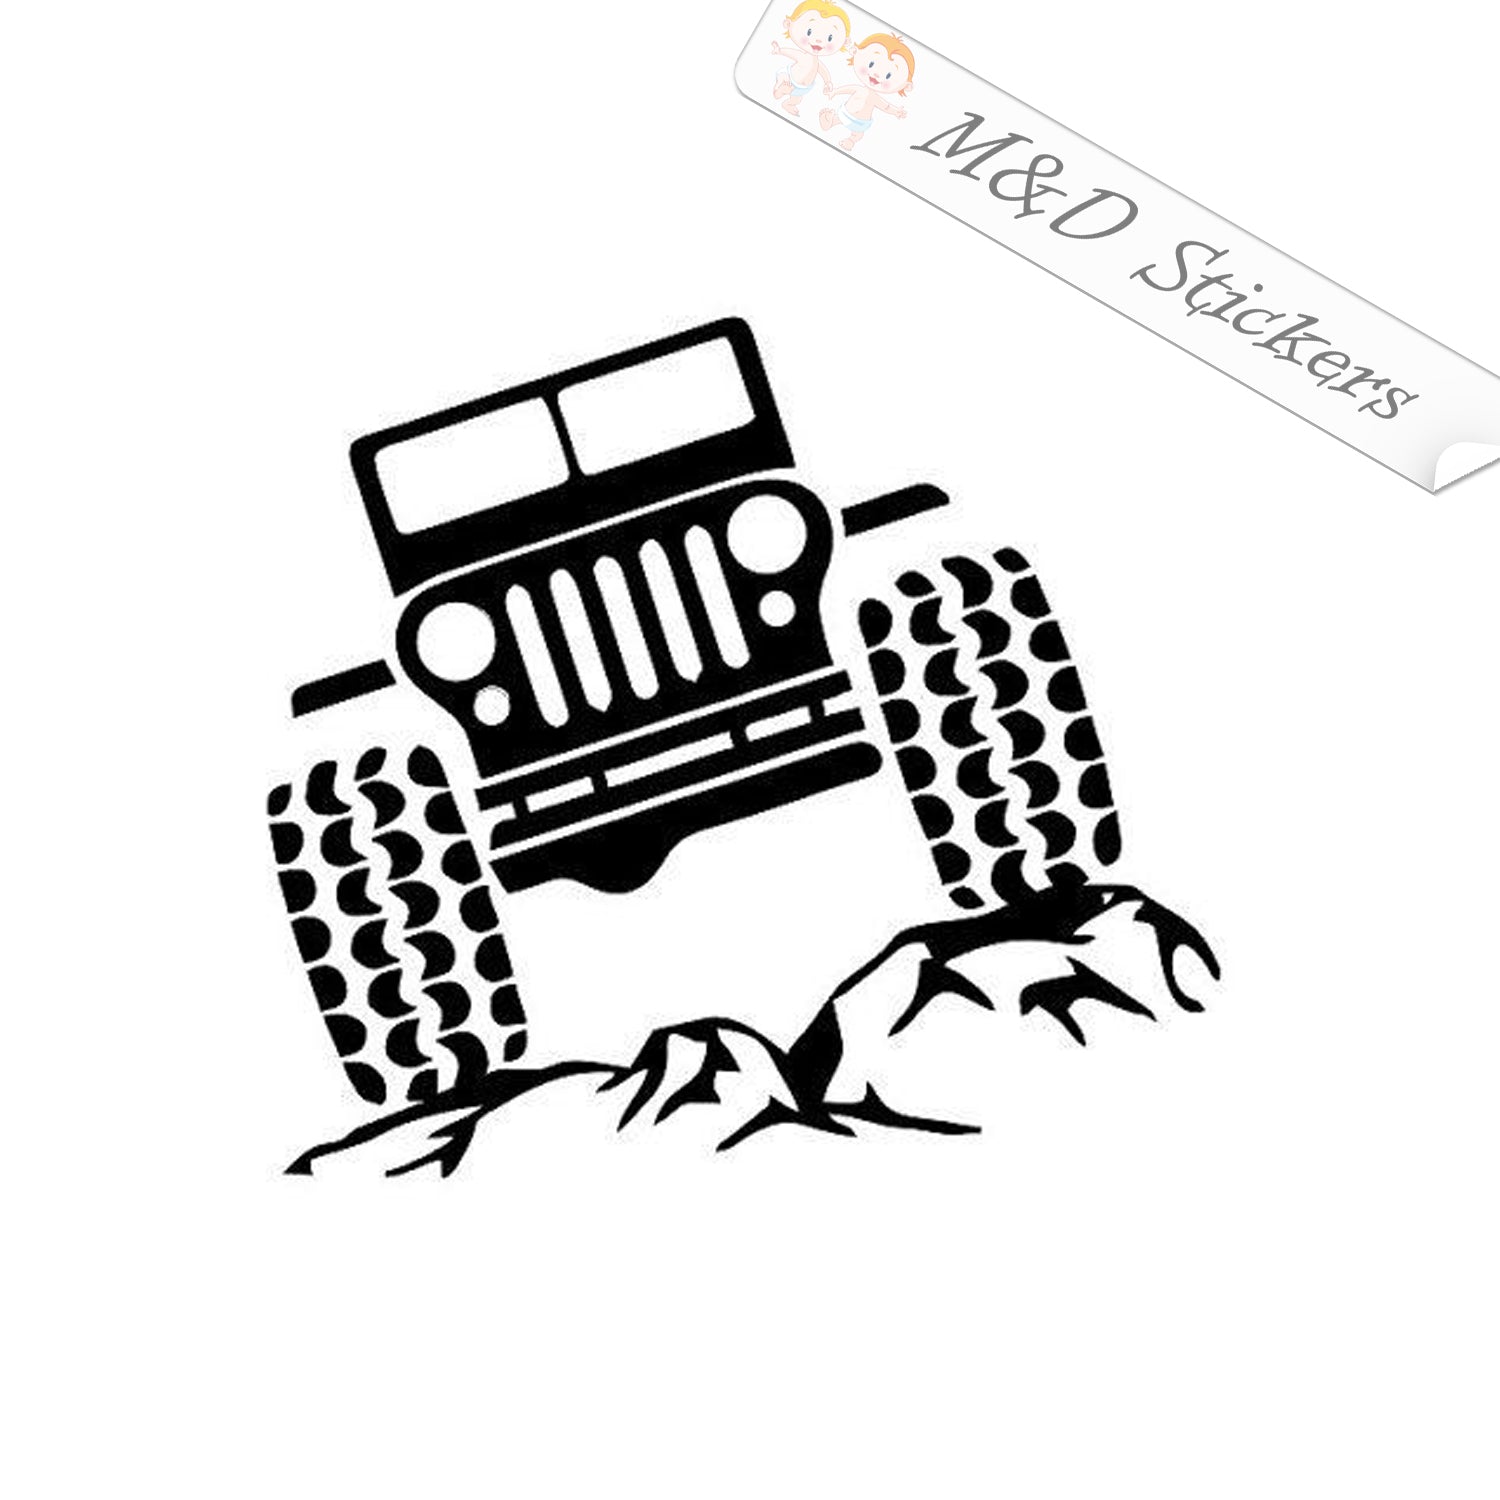 Offroad jeep stock illustration. Illustration of expedition - 76218548 |  Jeep art, Jeep drawing, Offroad jeep